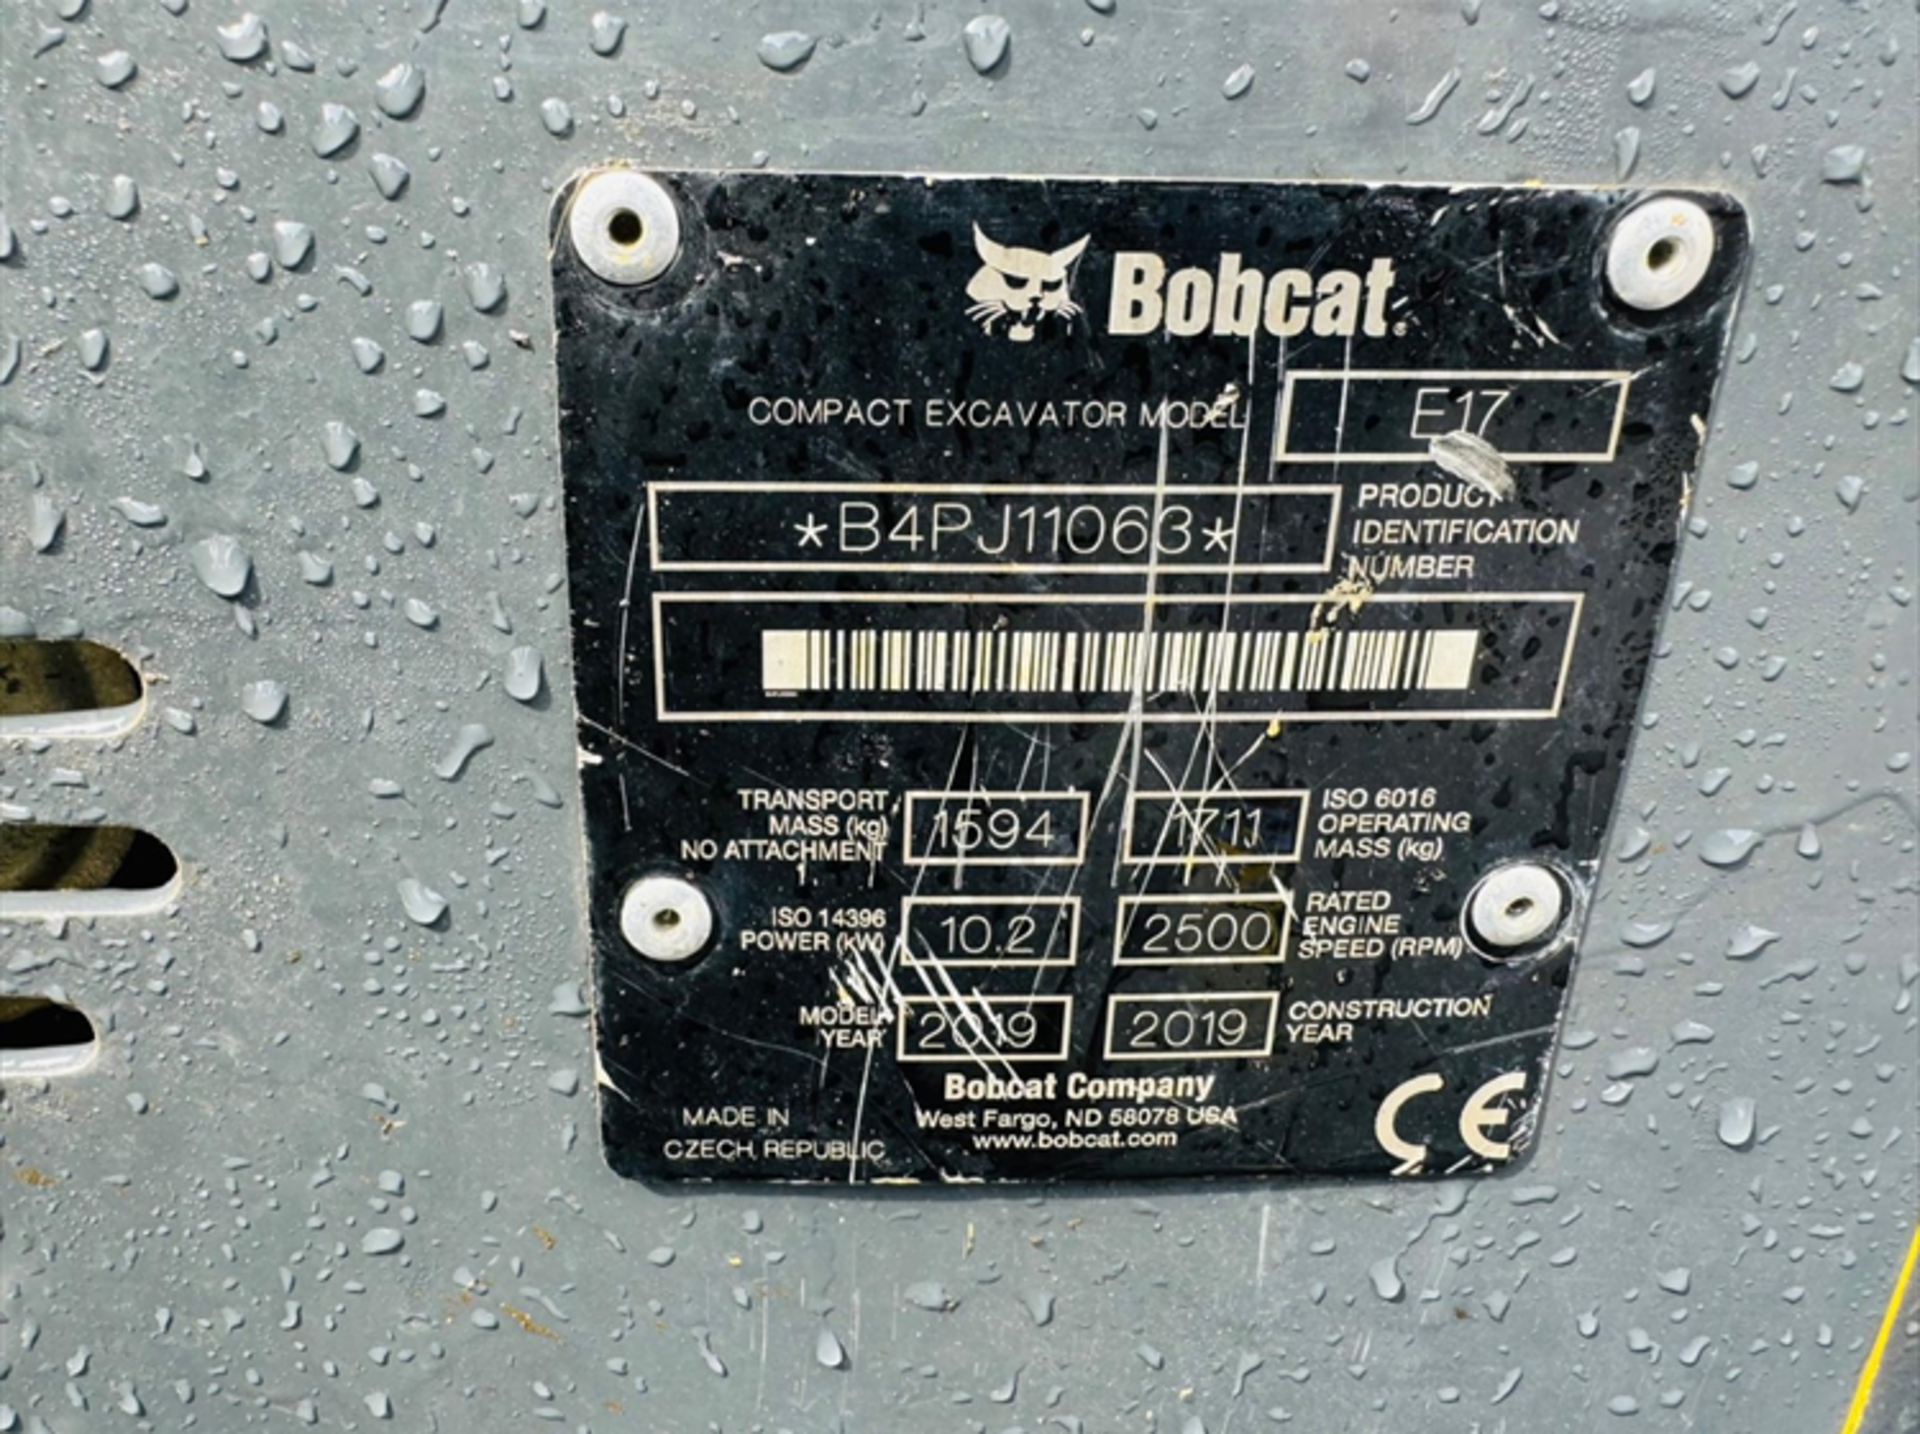 2019, BOBCAT E17 EXCAVATOR - (2032 hours) - Image 2 of 13